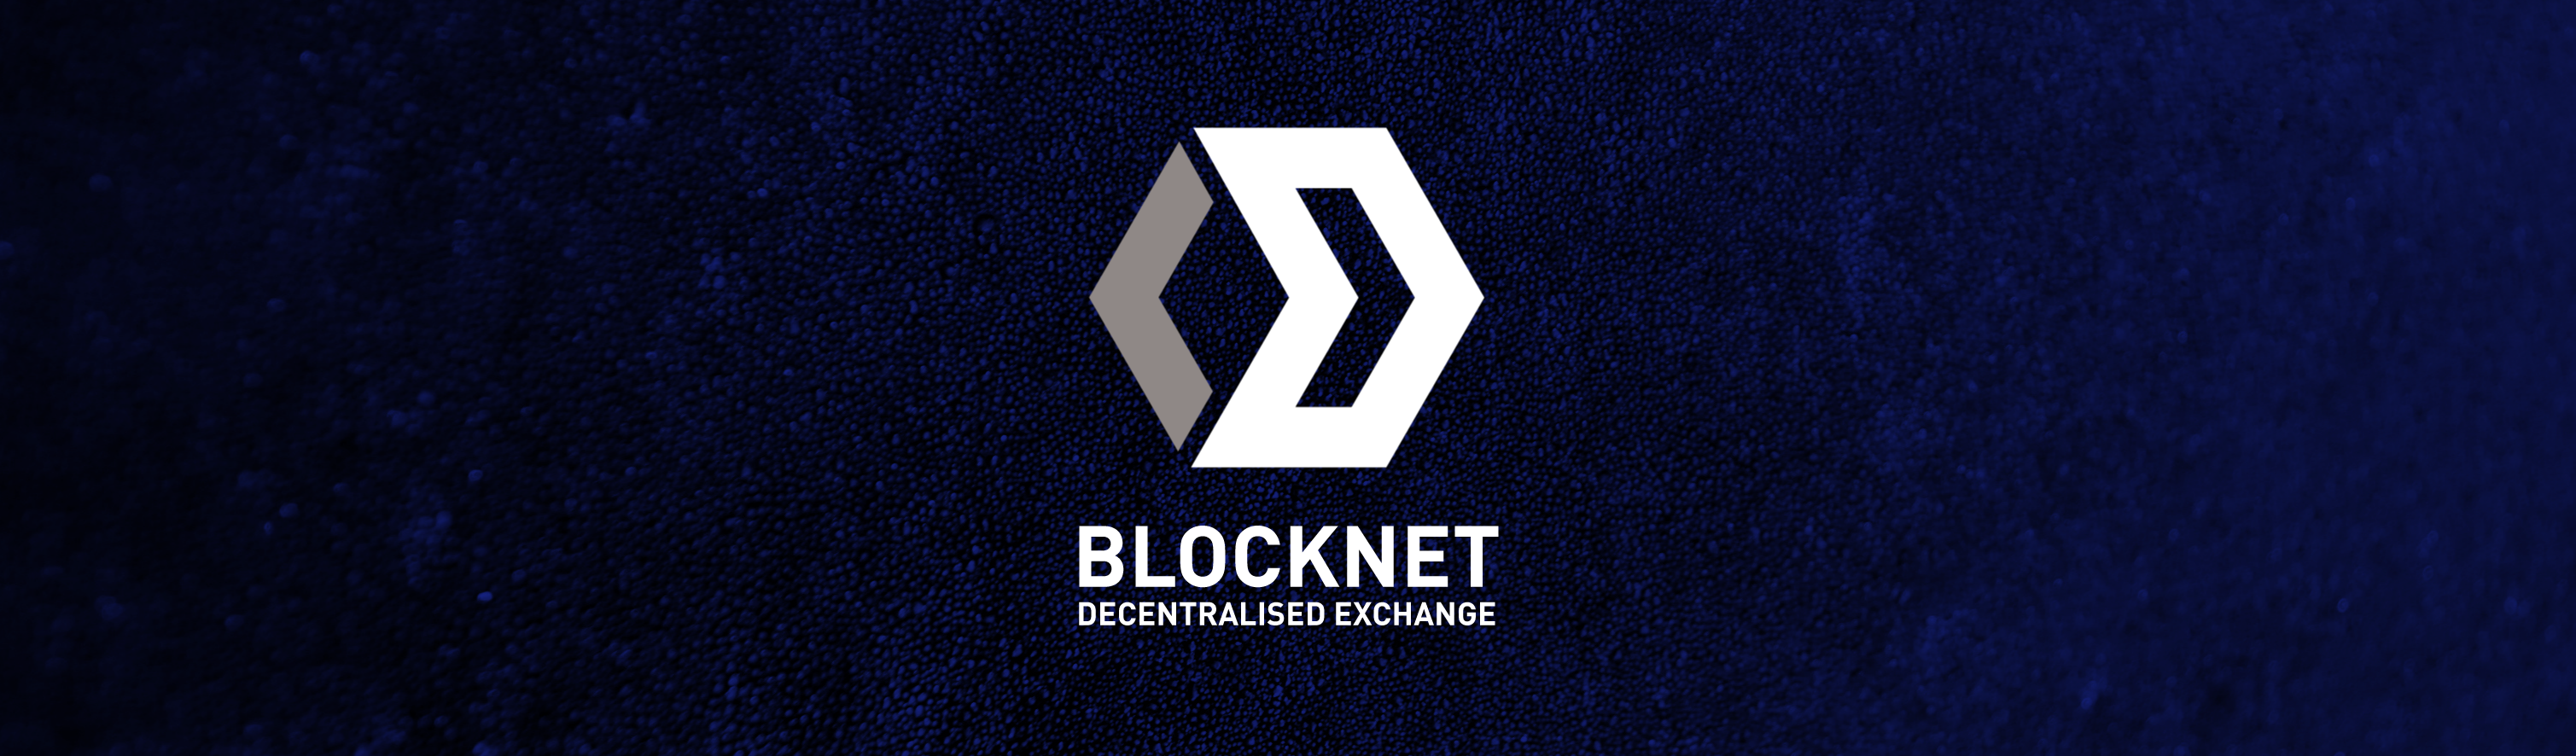 16-08-25-blocknet-decentralised-exchange.png